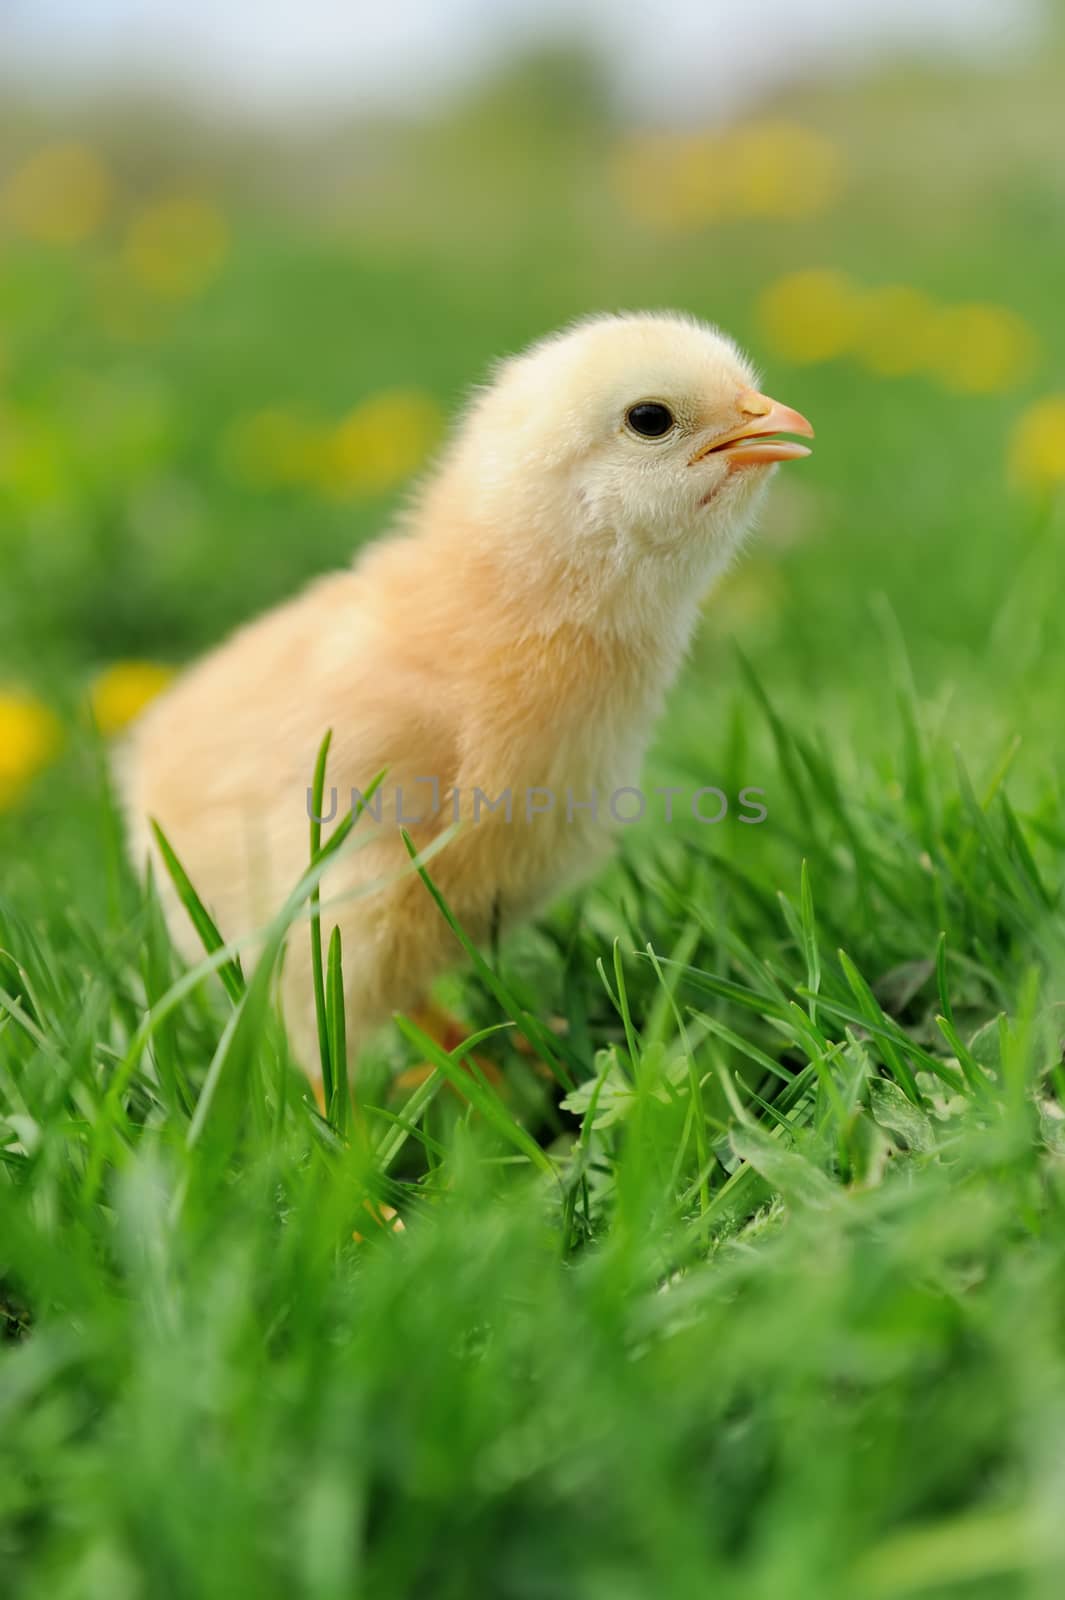 Beautiful little chicken on green grass in garden